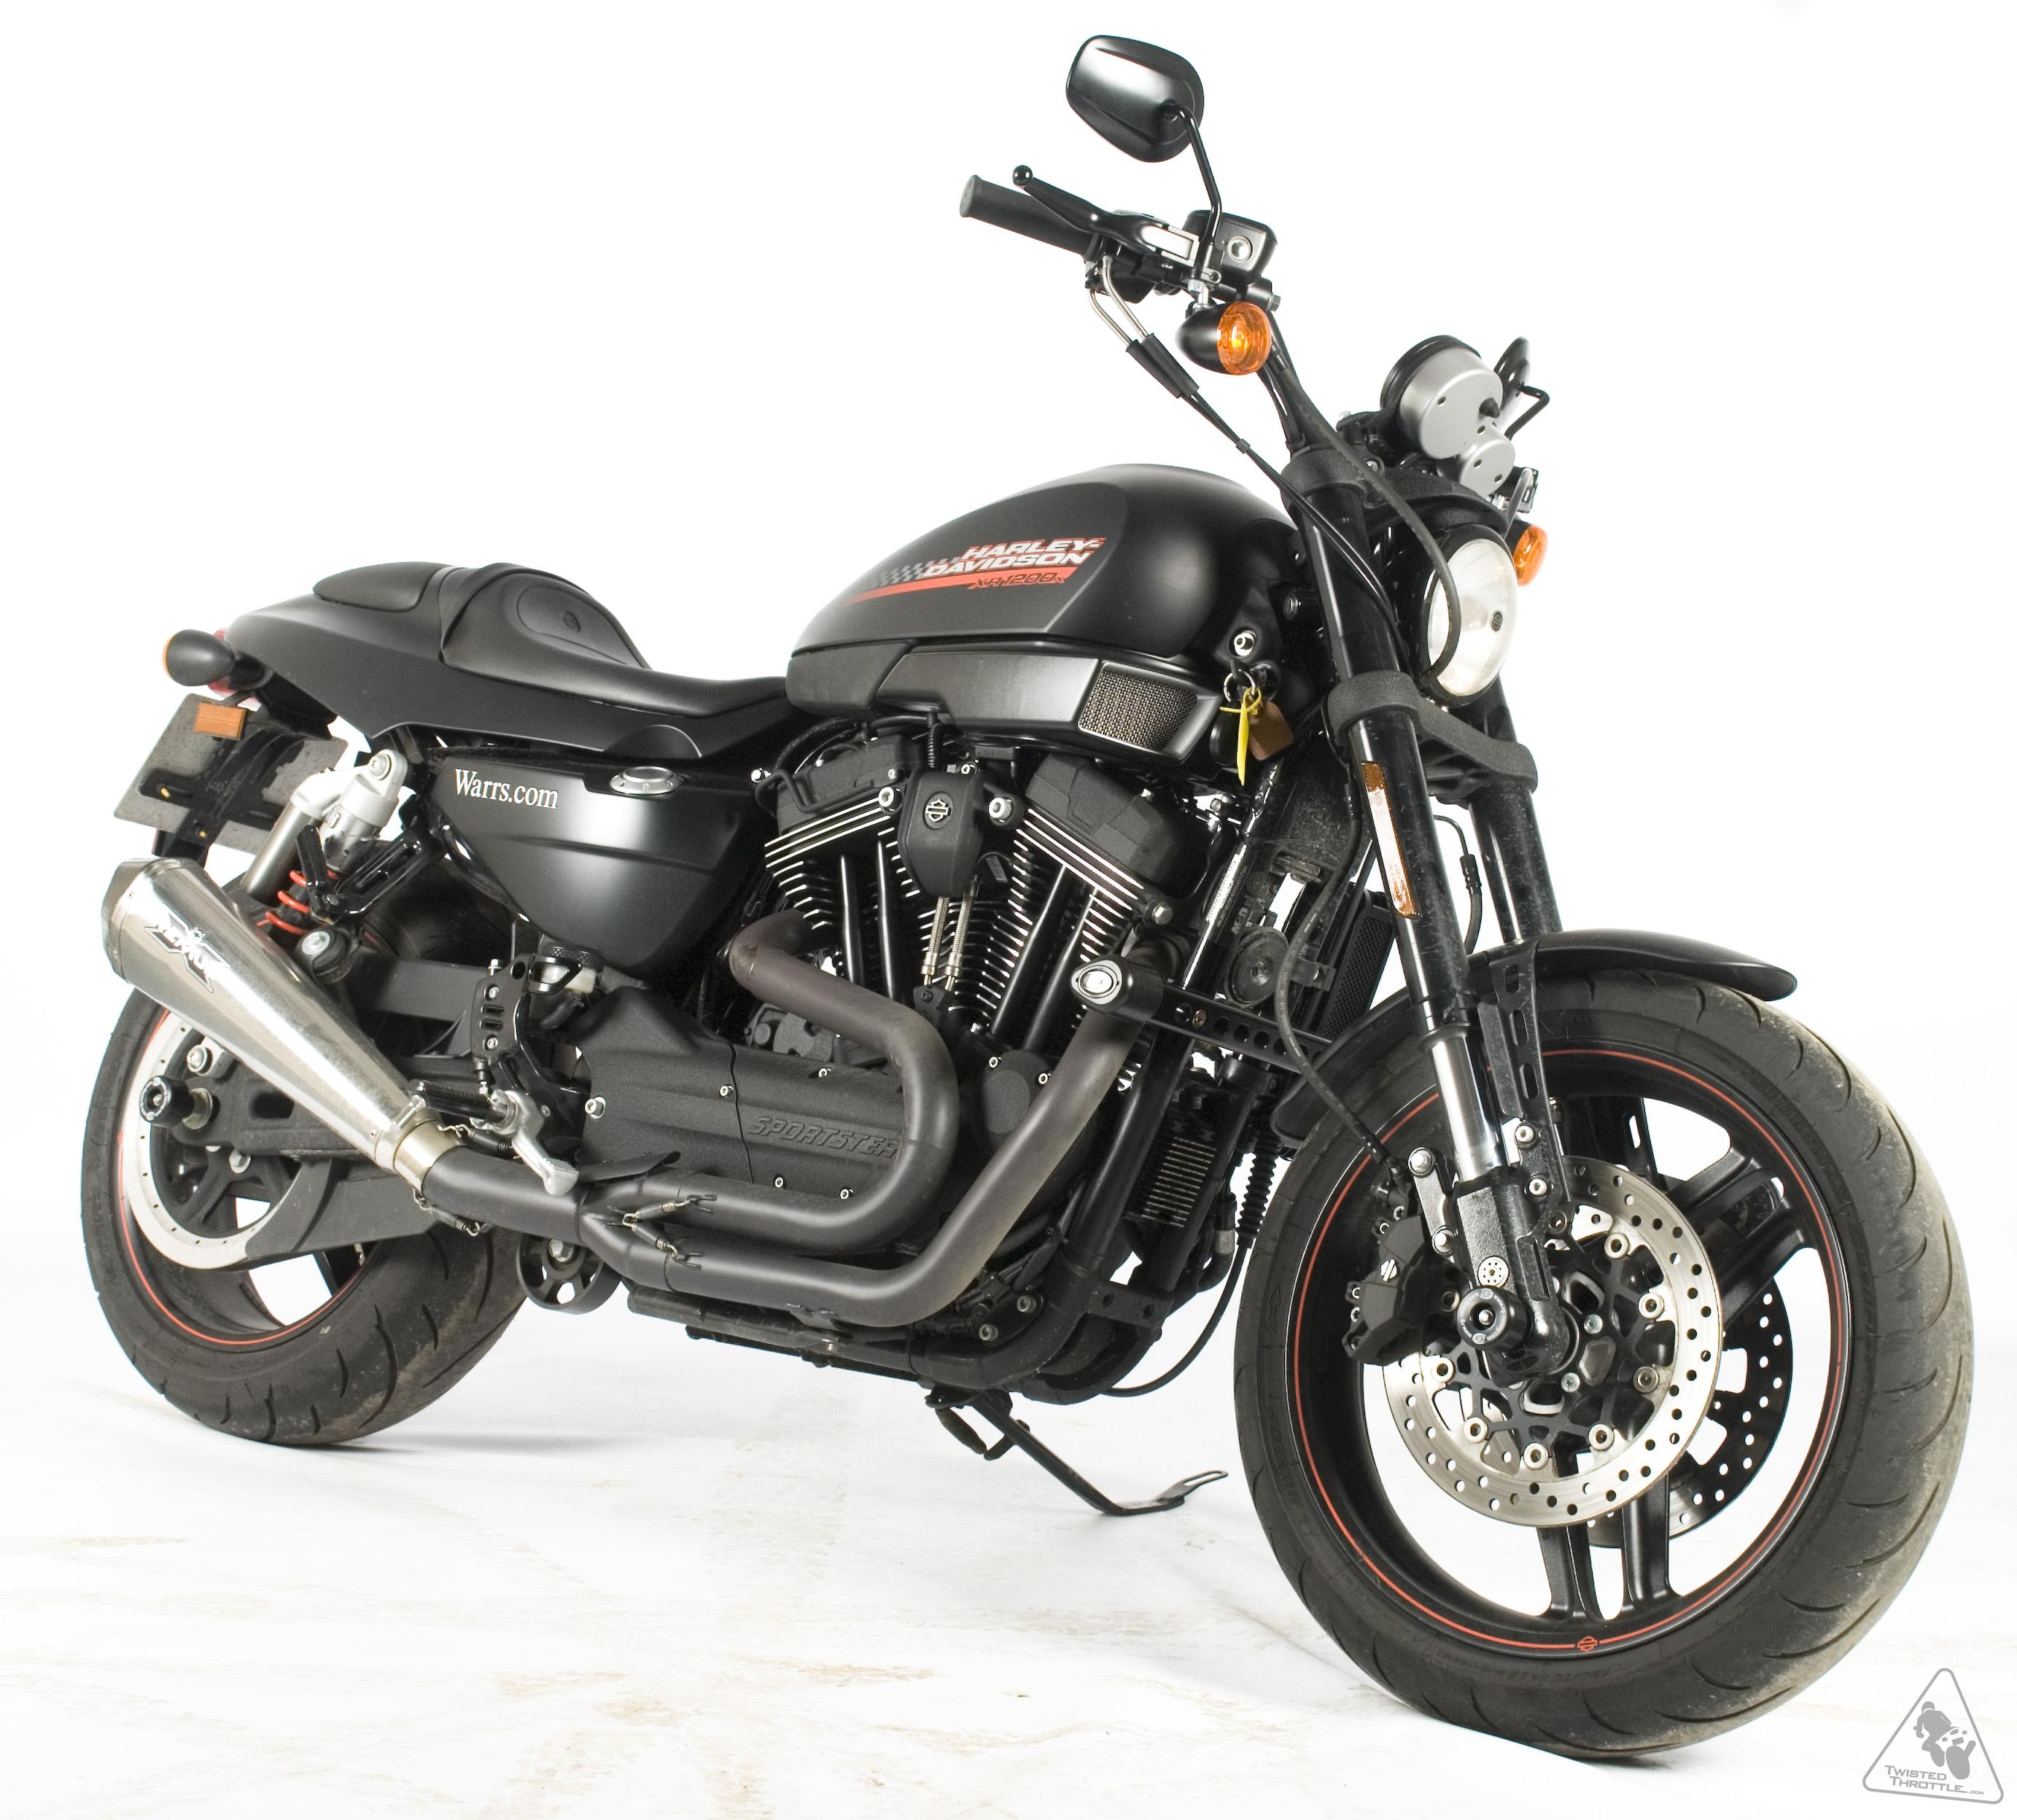 Harley-Davidson XR1200 Backgrounds, Compatible - PC, Mobile, Gadgets| 2766x2496 px